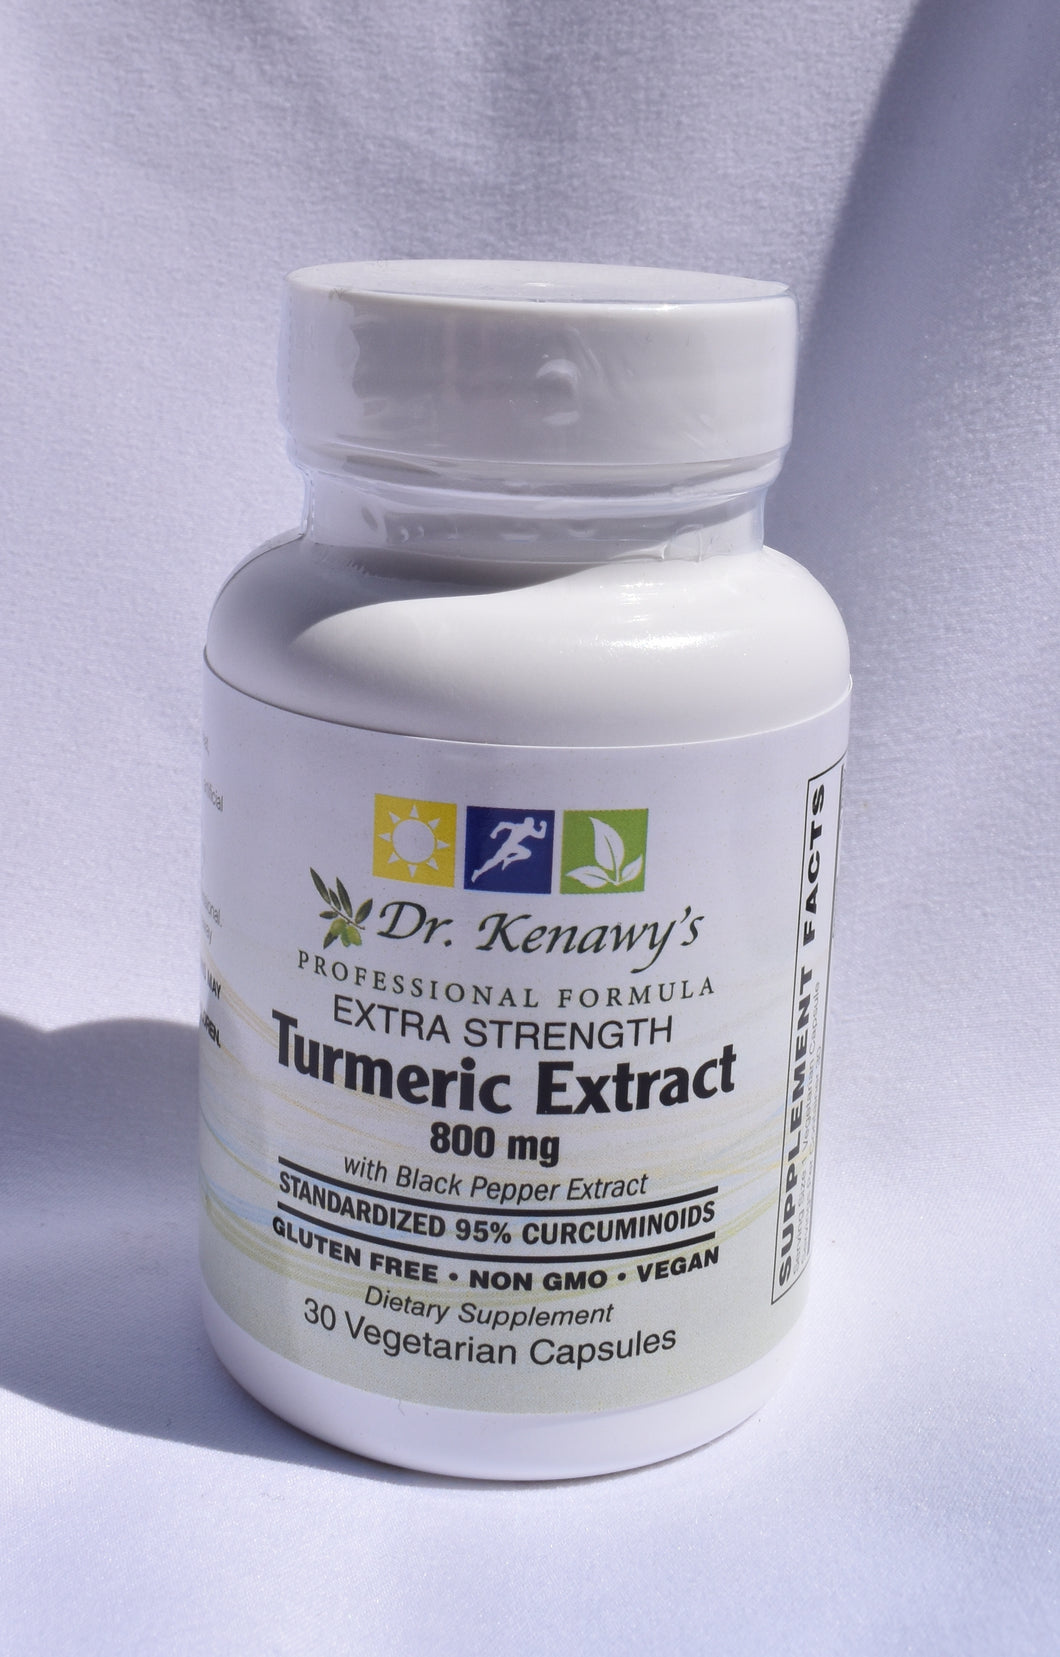 Dr. Kenawy's Turmeric Exact: Extra Strength